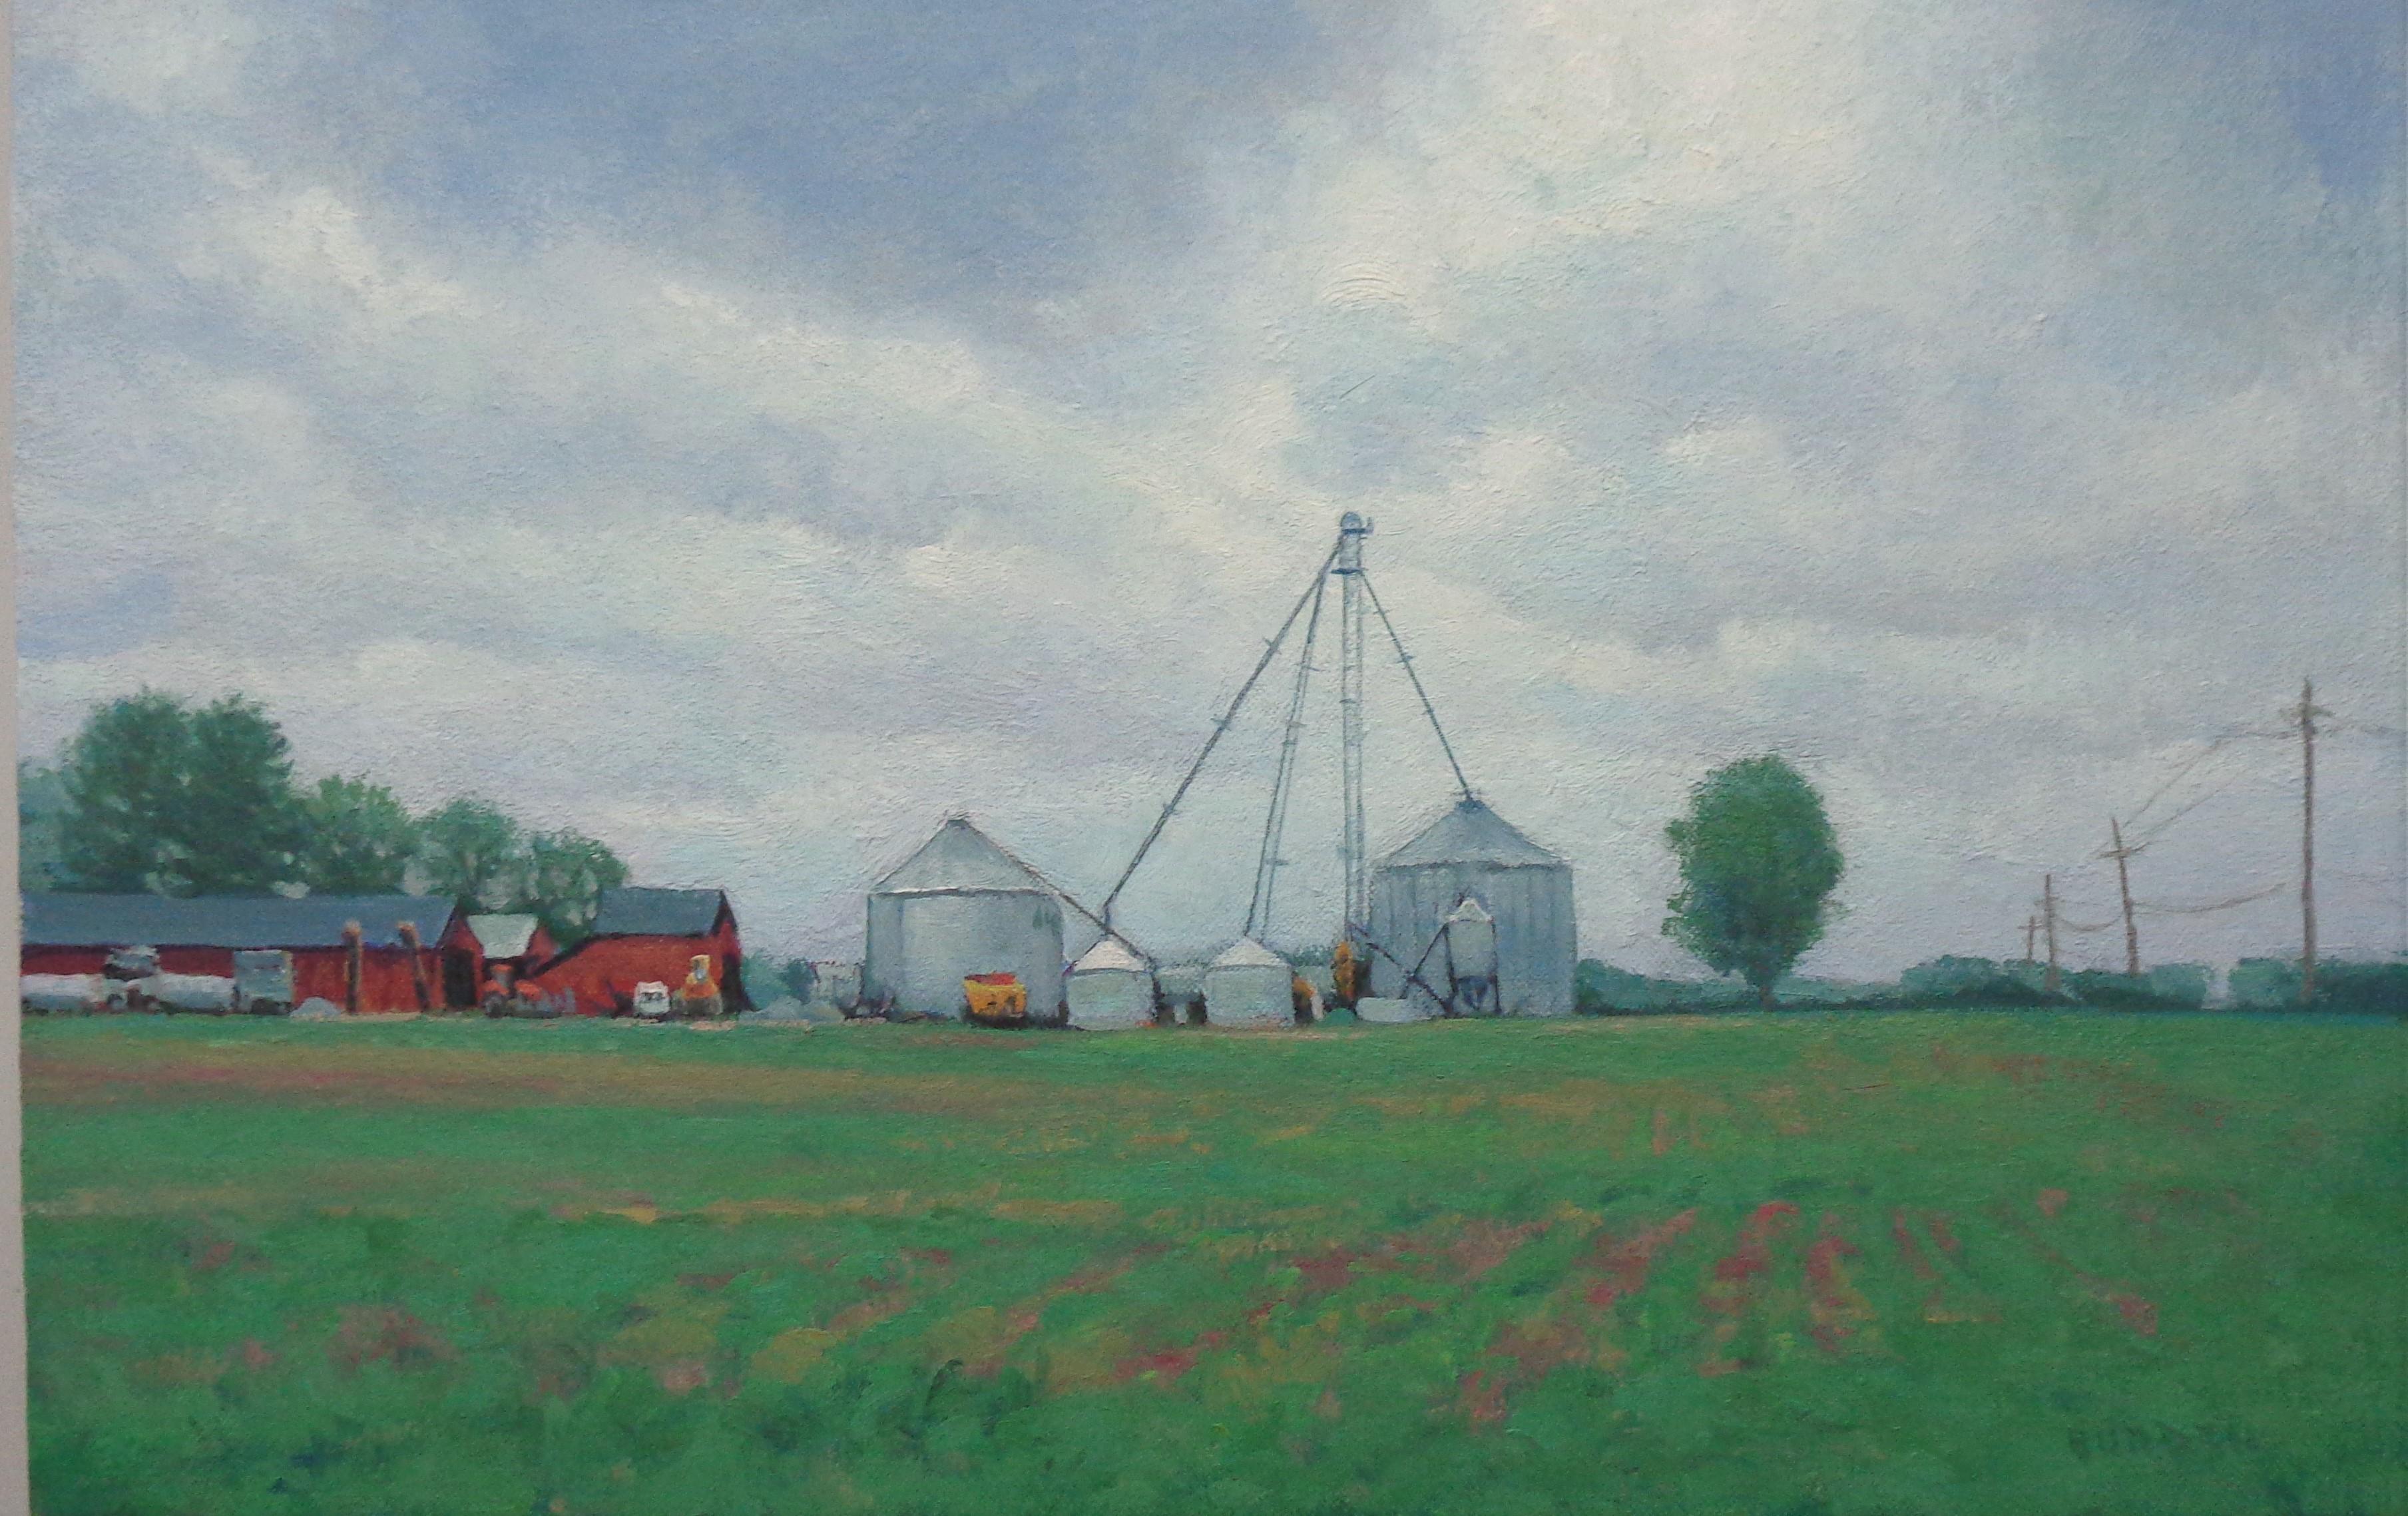  Impressionistic Rural Farm Award Winner Landscape Oil Painting Michael Budden  For Sale 1